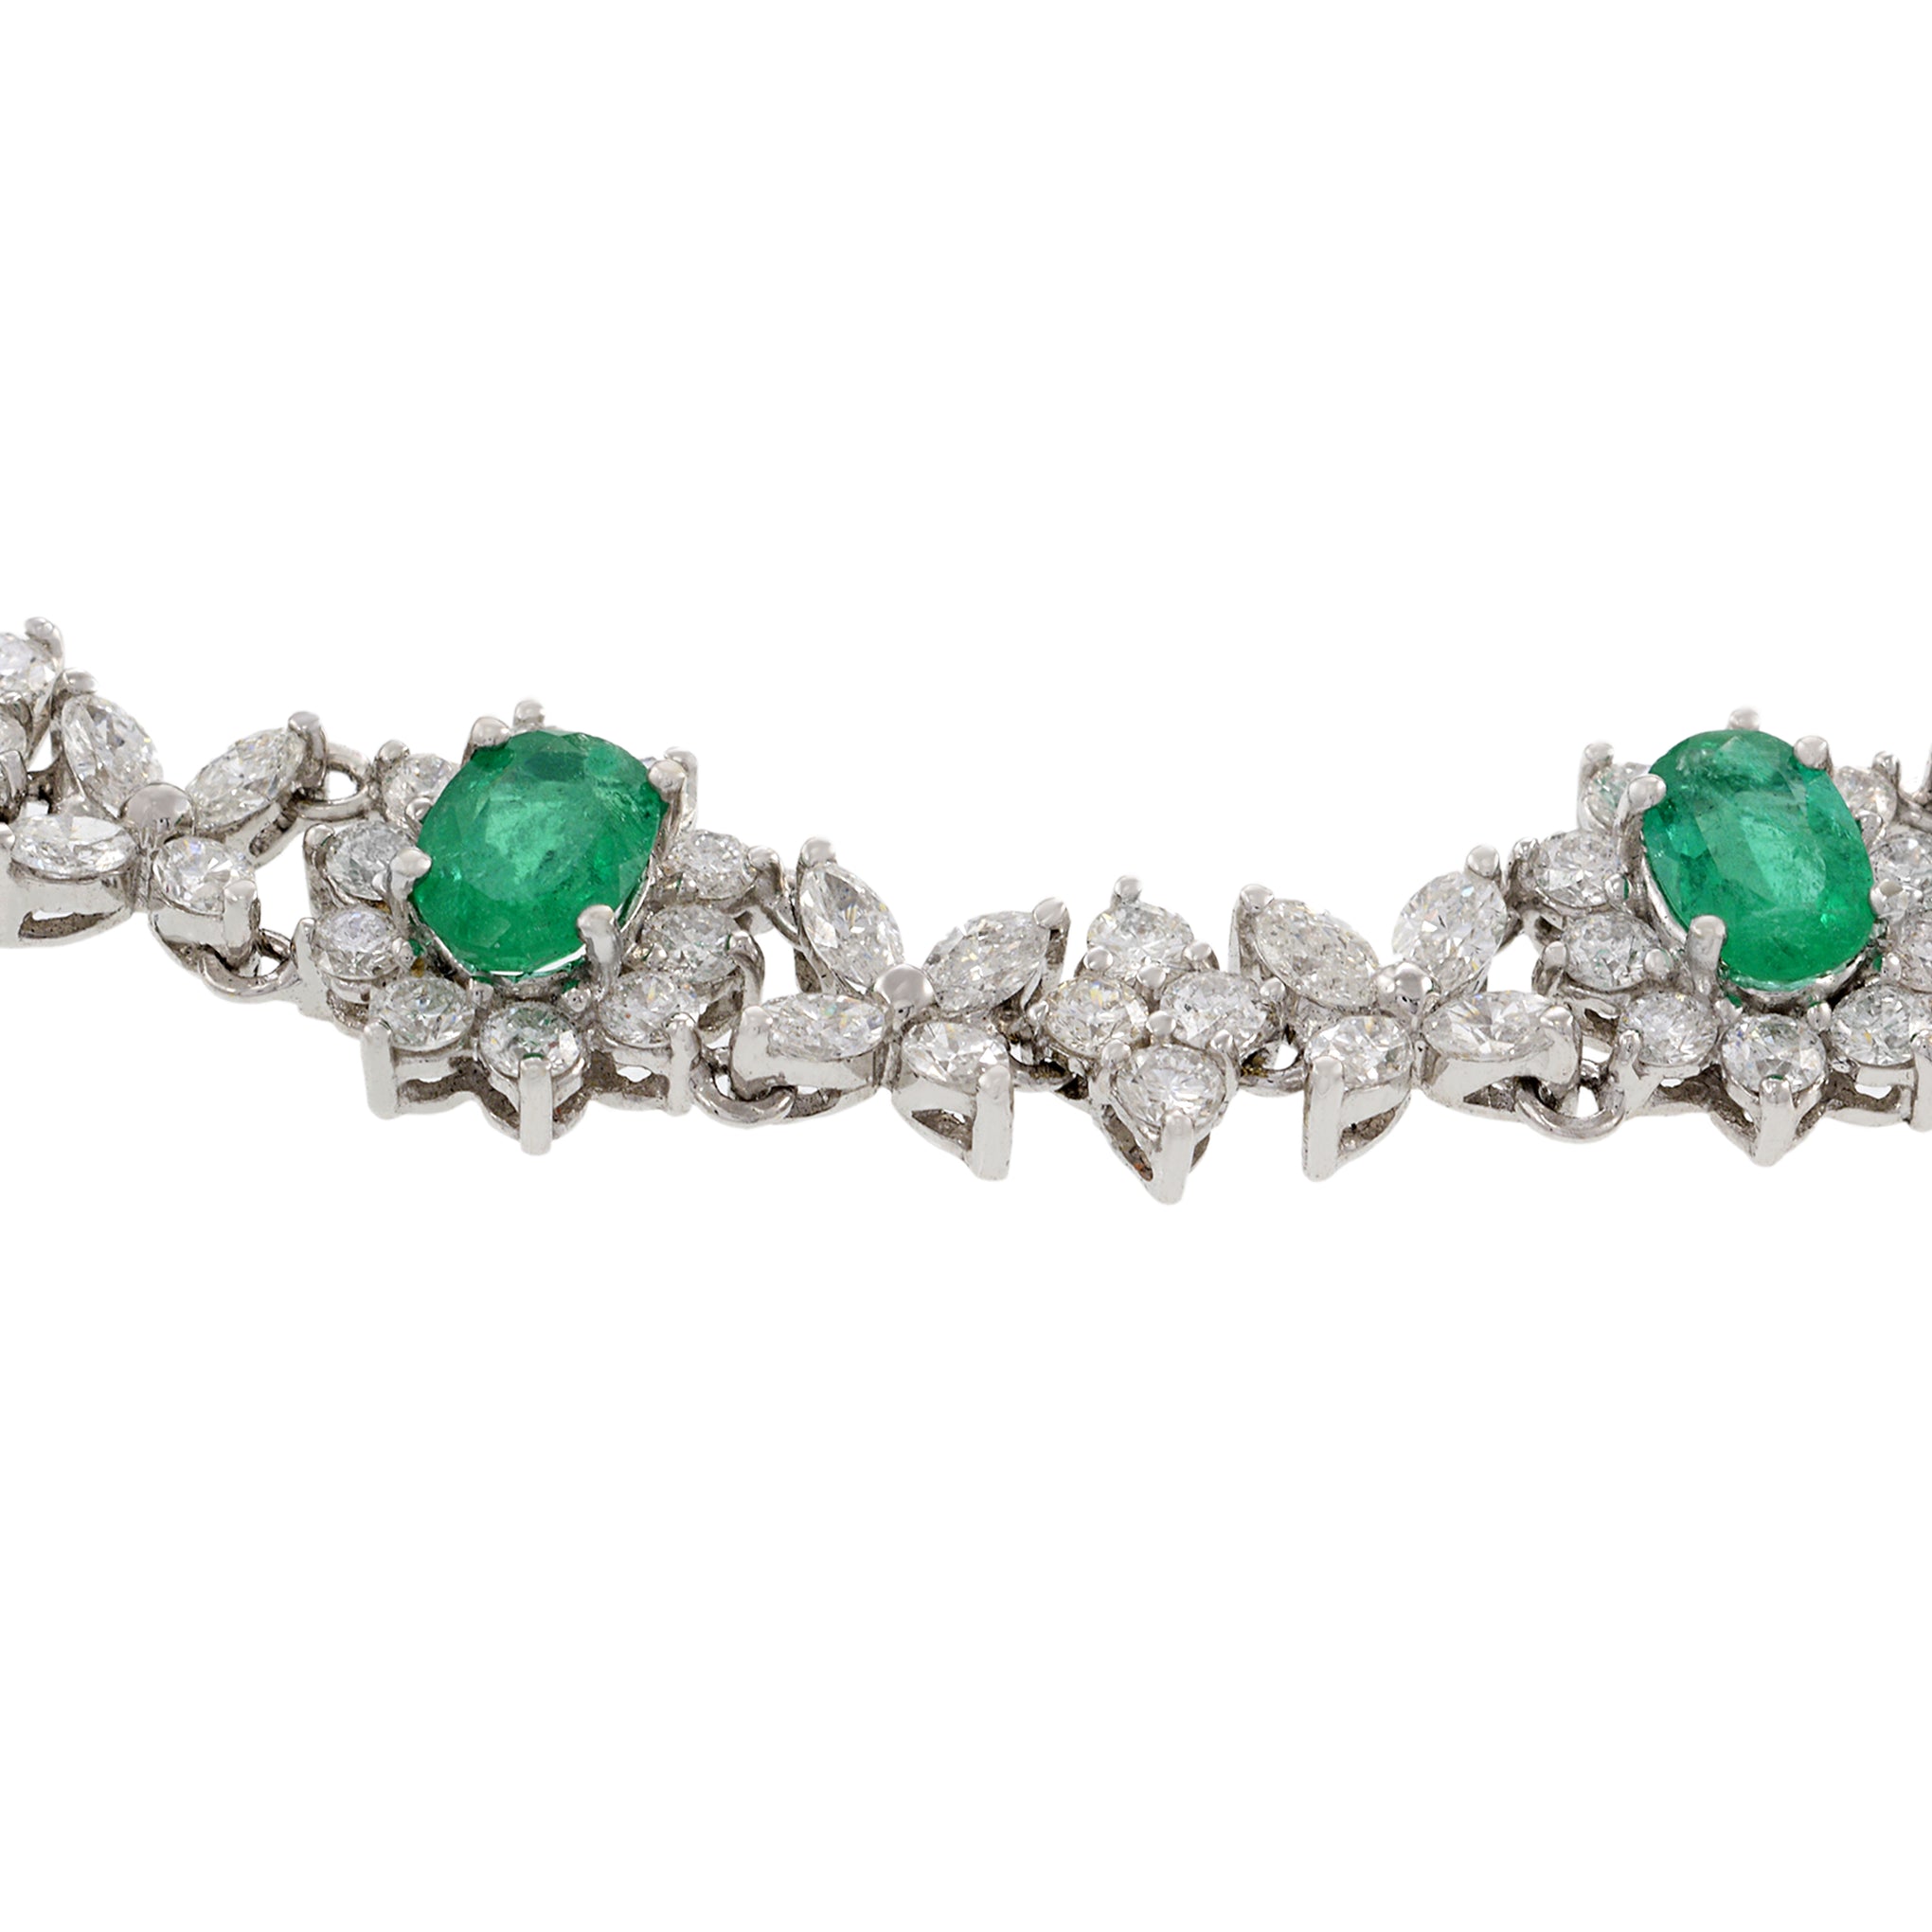 18kt White Gold Emerald Bracelet with Diamonds